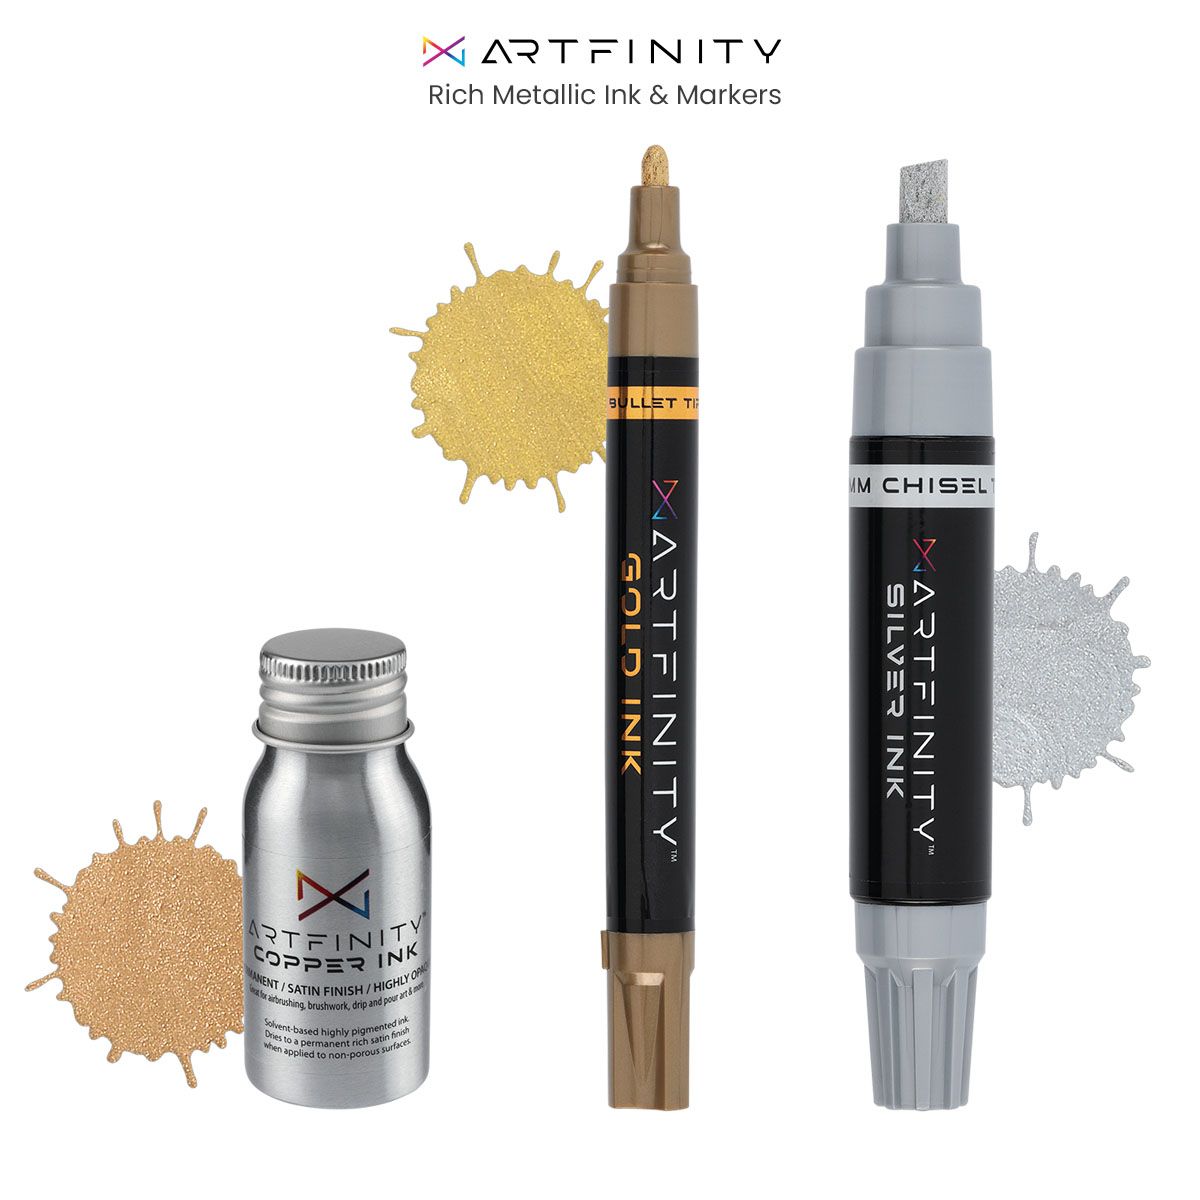 Make An Impact With Artfinity Rich Metallic Inks